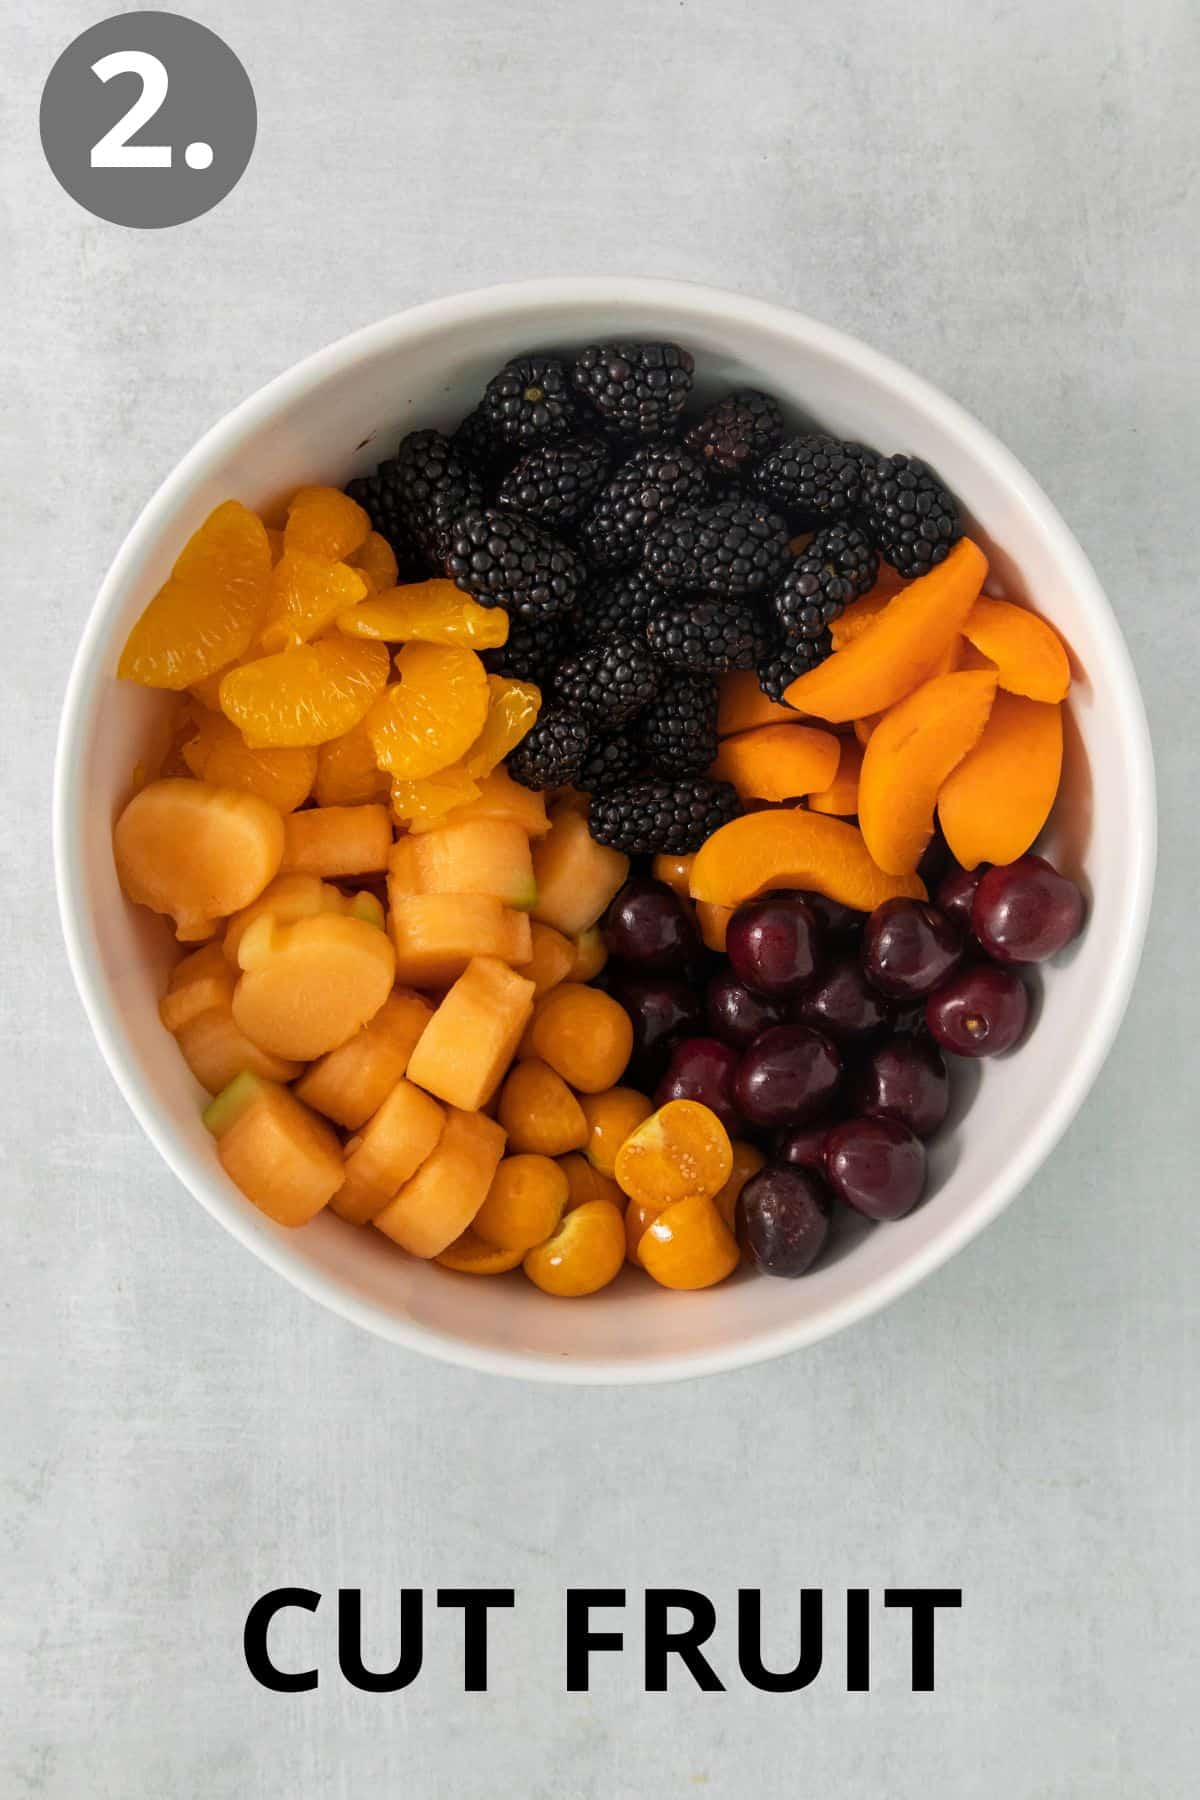 Fruit poured into a bowl